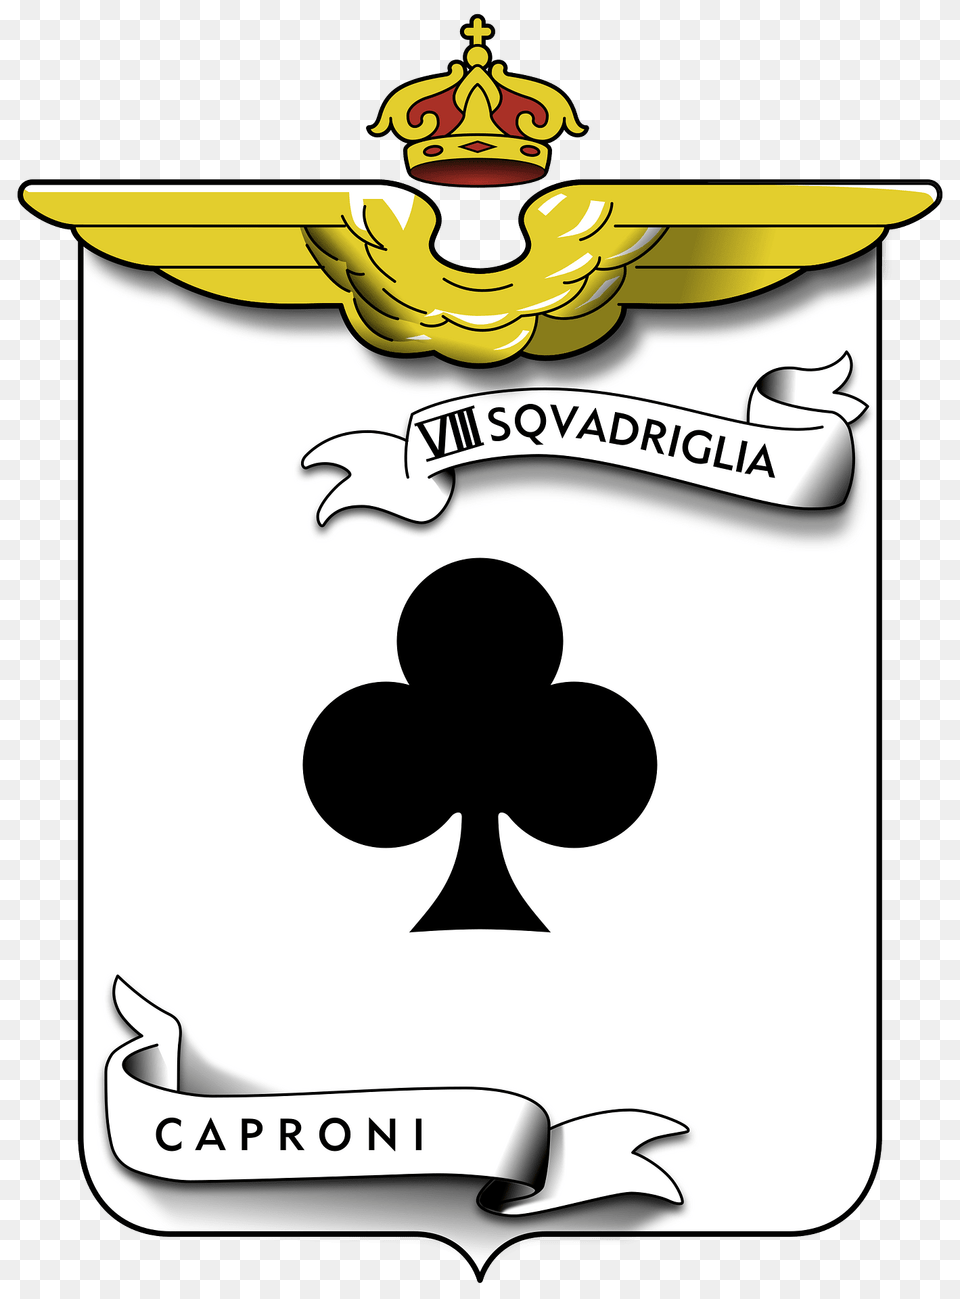 Coa Viii Squadriglia Caproni Club Clipart, Logo, Symbol, Text, Smoke Pipe Png